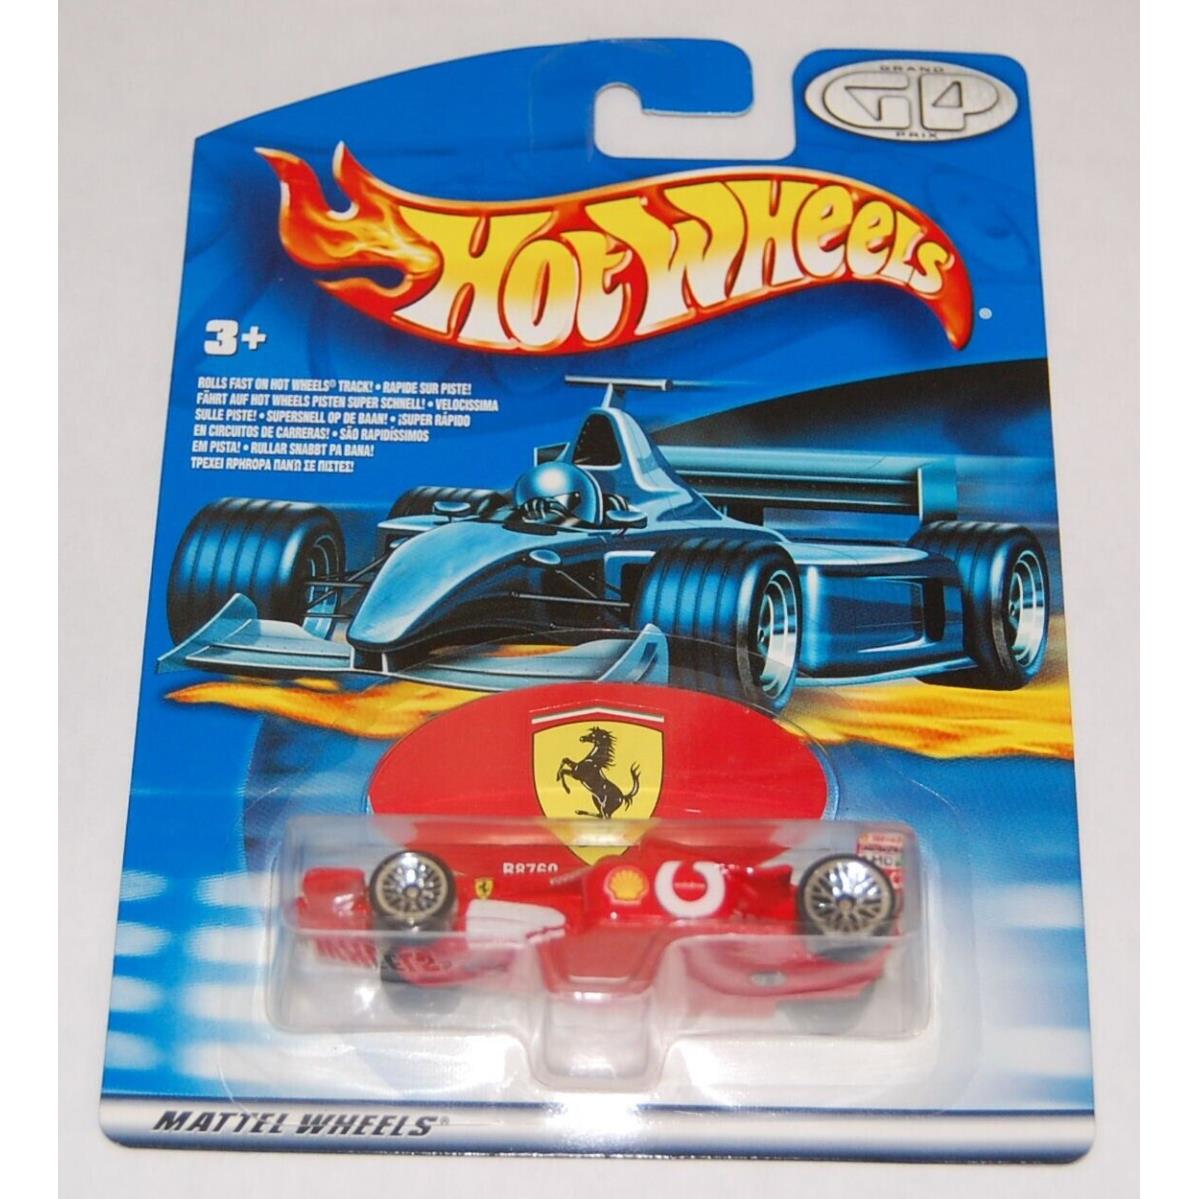 Mattel Hot Wheels Grand Prix GP B8769